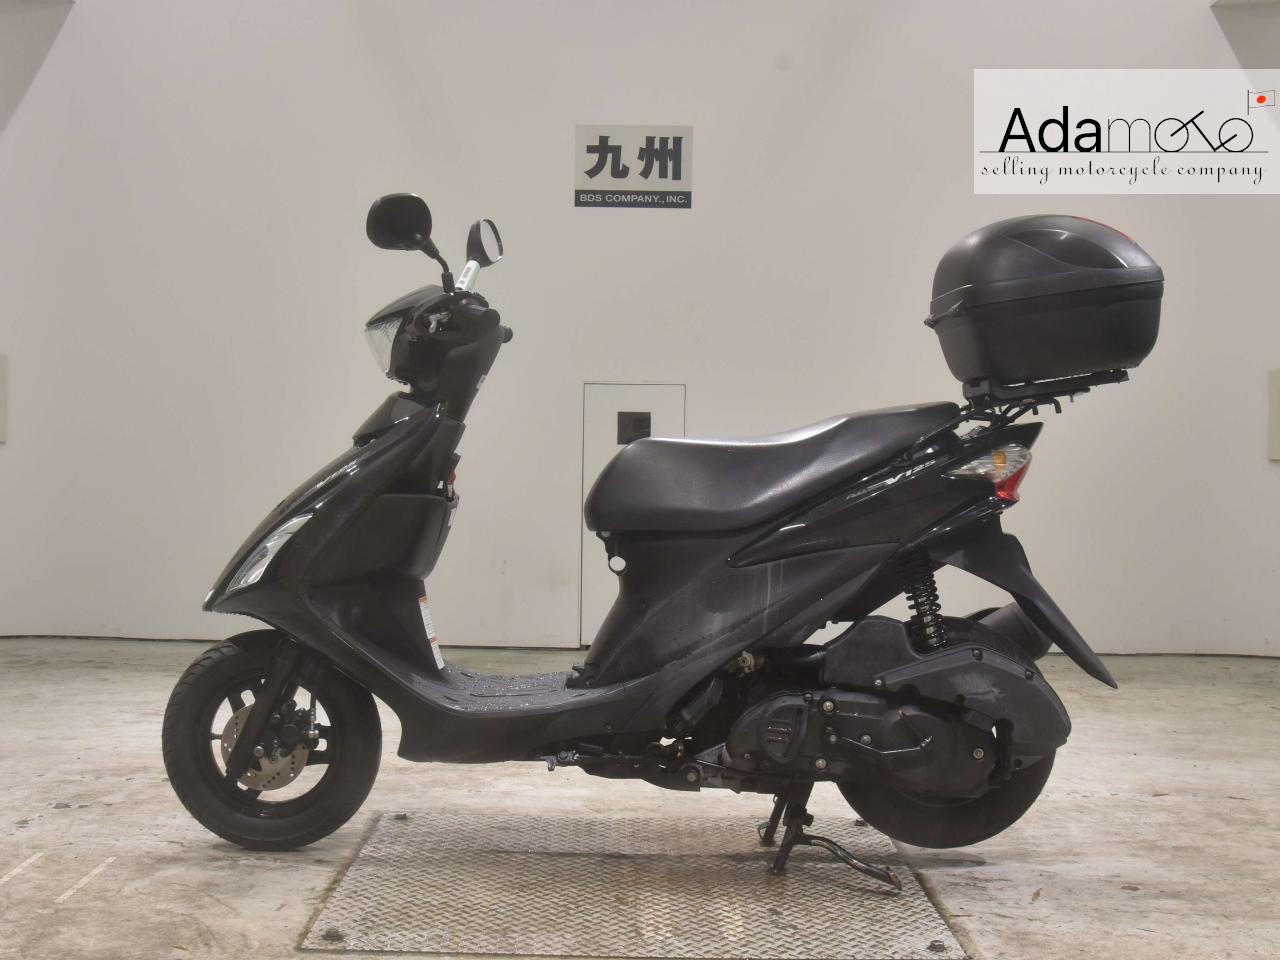 Suzuki ADDRESS V125S - Adamoto - Motorcycles from Japan